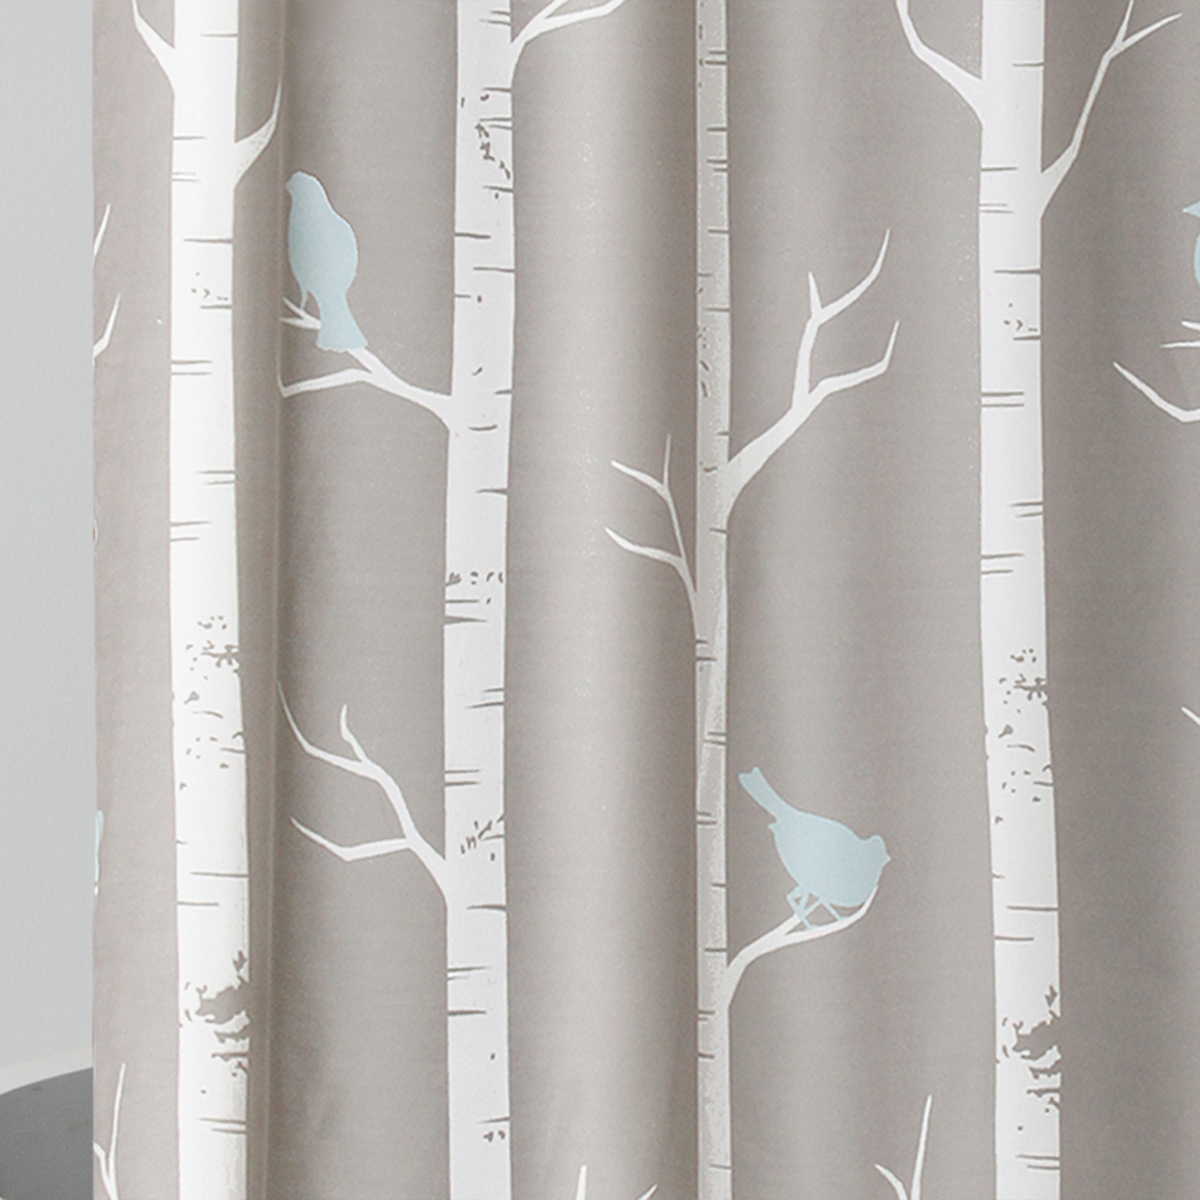 Lush Decor(R) Bird On The Tree Shower Curtain